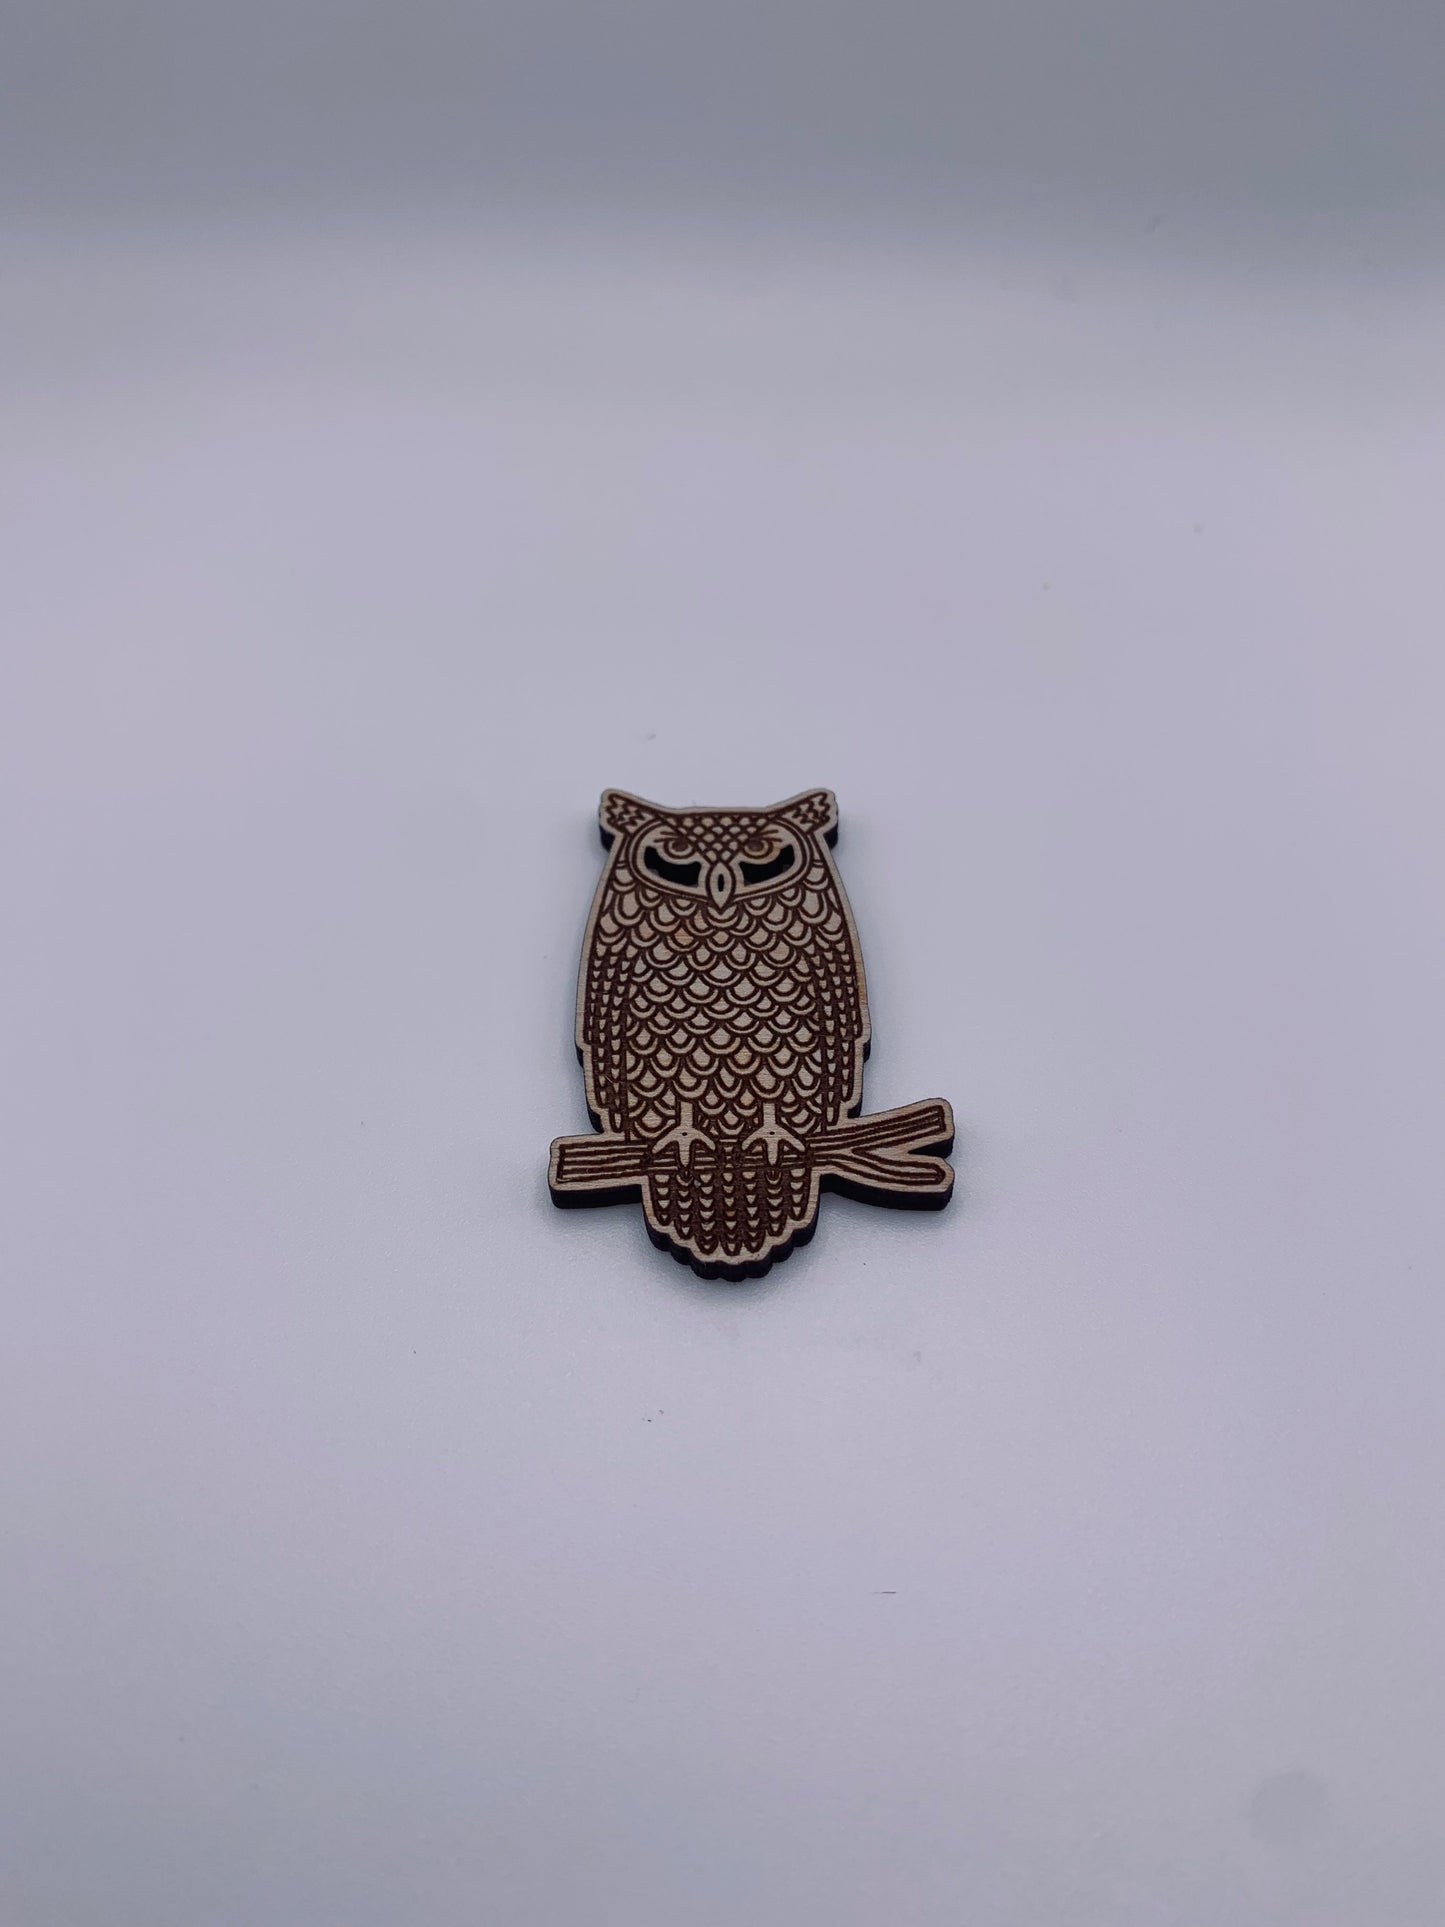 Owl - Creative Designs By Kari